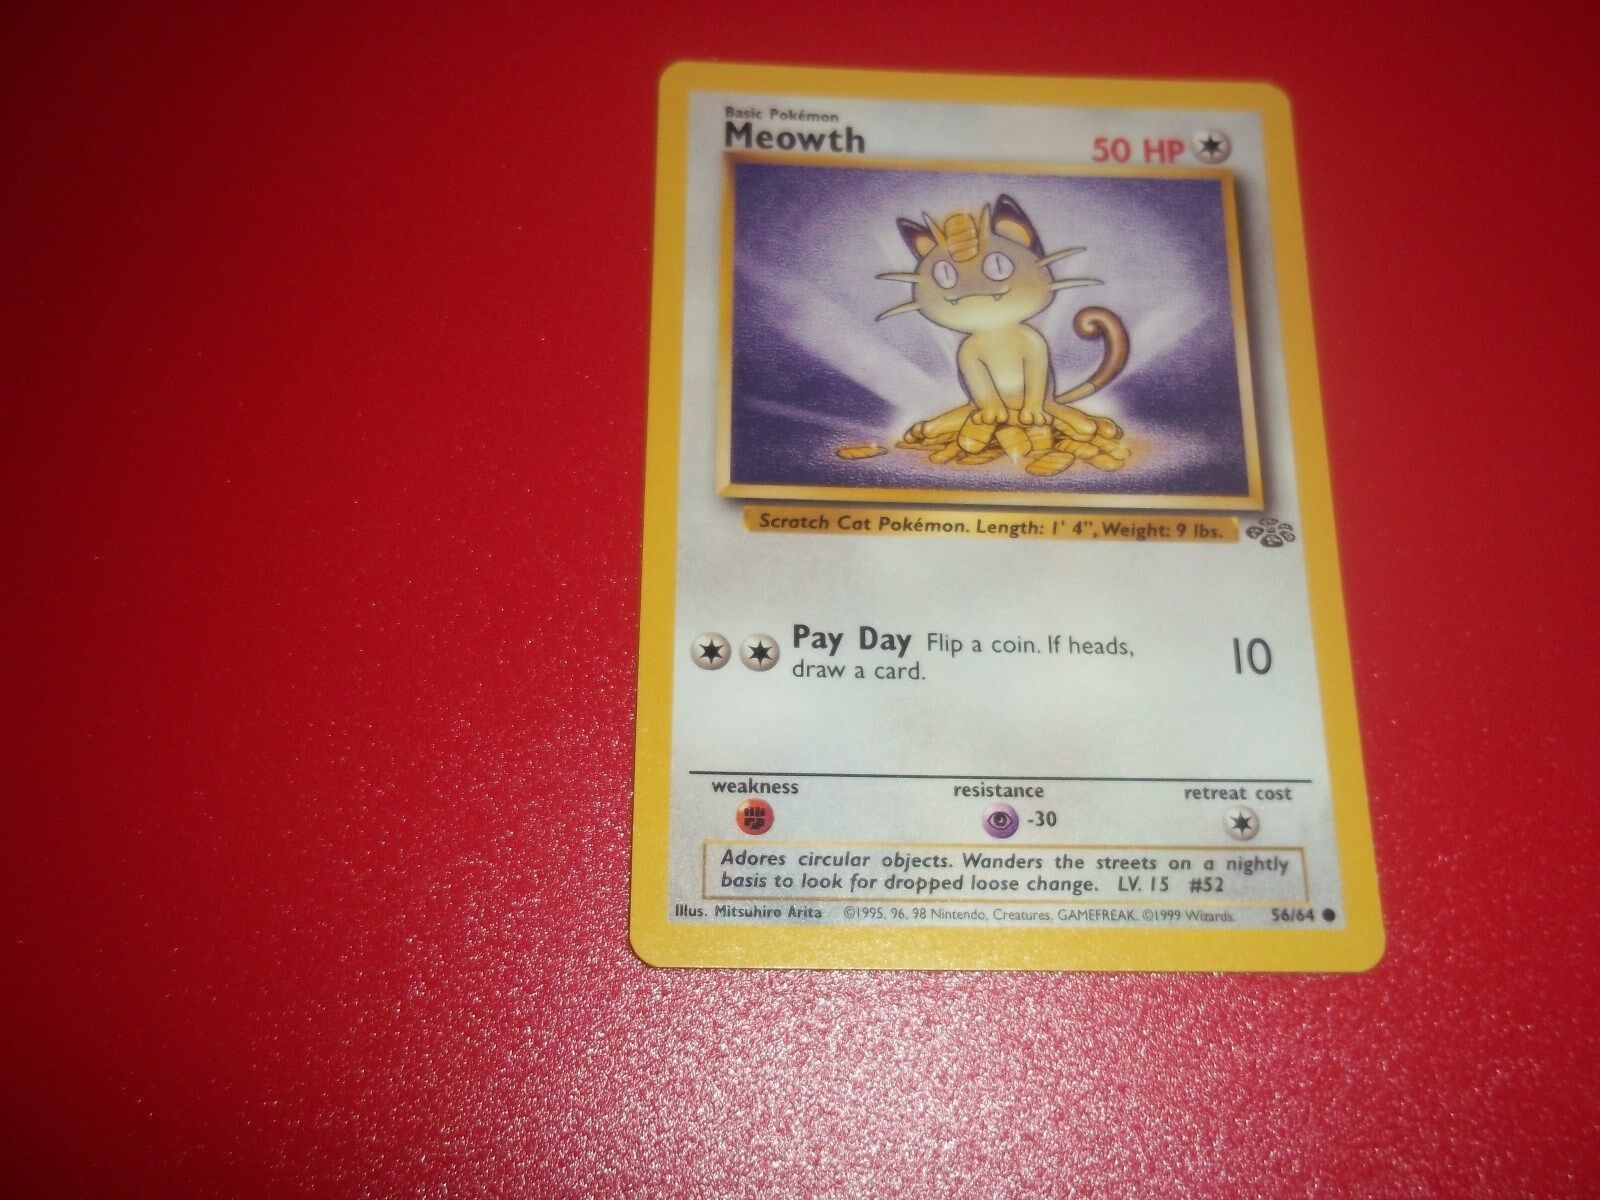 Primary image for ☆Pokemon Trading Game Card☆Meowth (56/64) Basic Pokemon 50 HP 1998☆